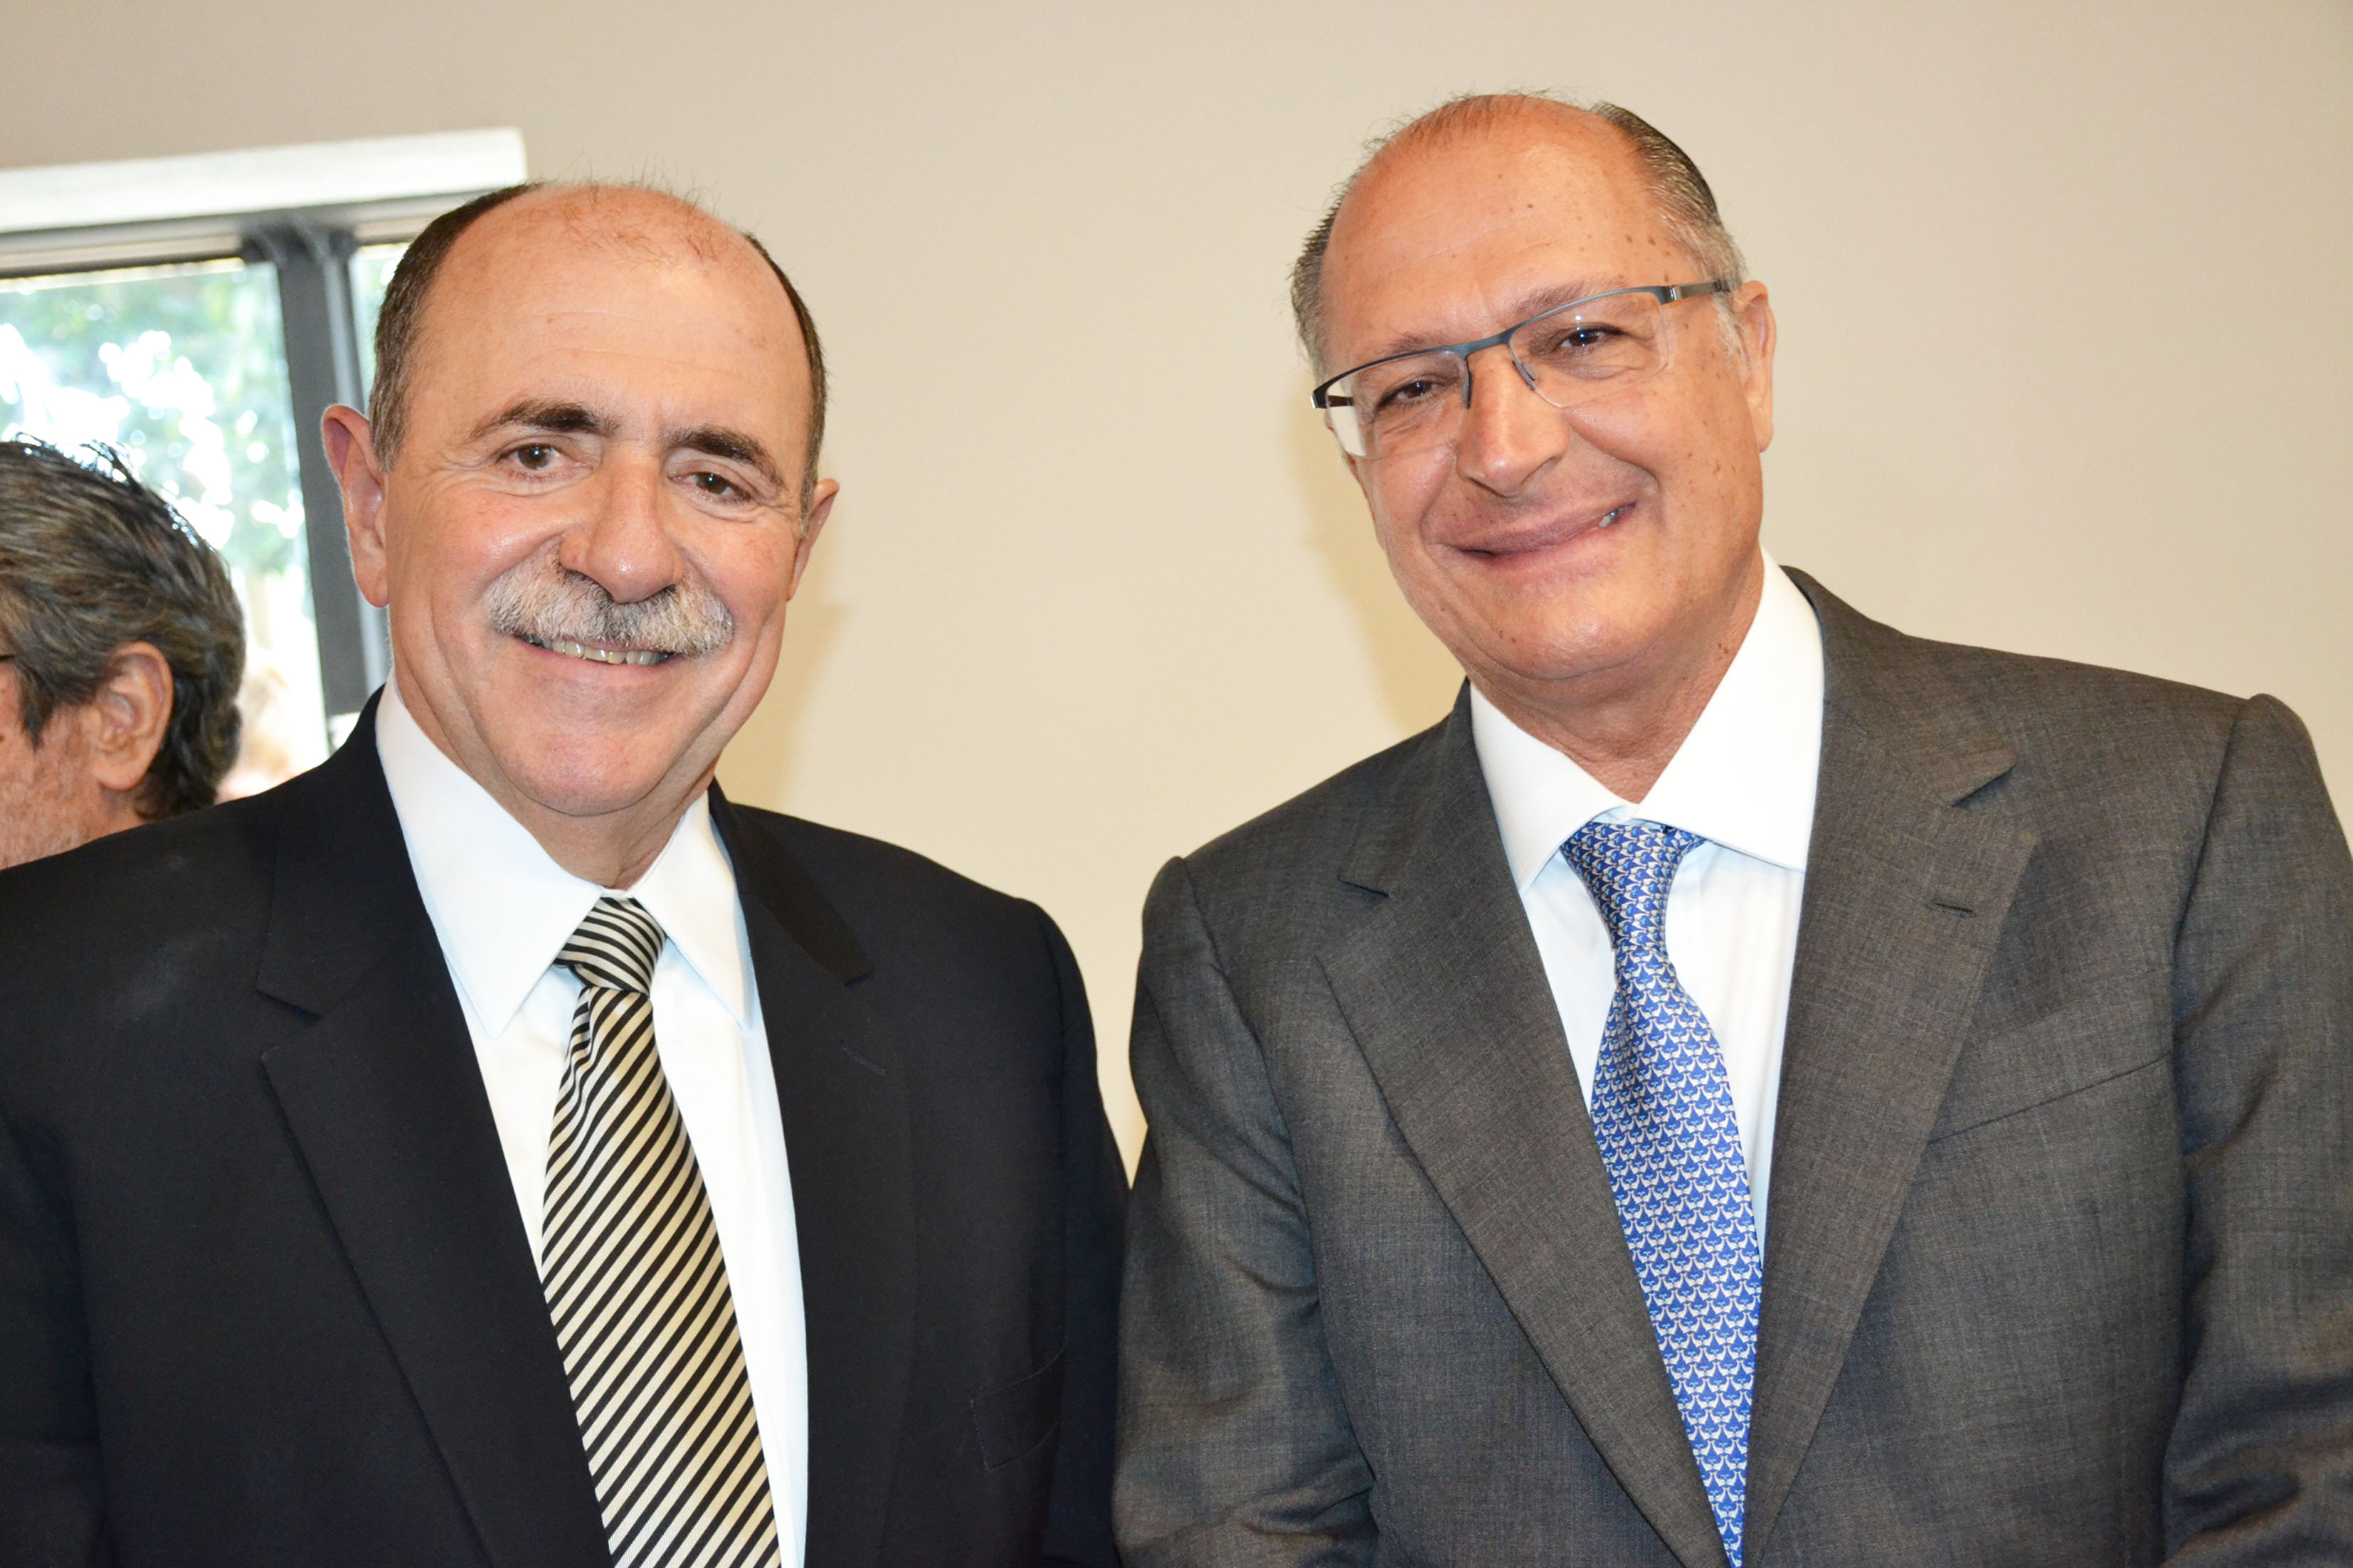 Caramez e Alckmin no Instituto Butantan<a style='float:right;color:#ccc' href='https://www3.al.sp.gov.br/repositorio/noticia/N-02-2017/fg199141.jpg' target=_blank><i class='bi bi-zoom-in'></i> Clique para ver a imagem </a>